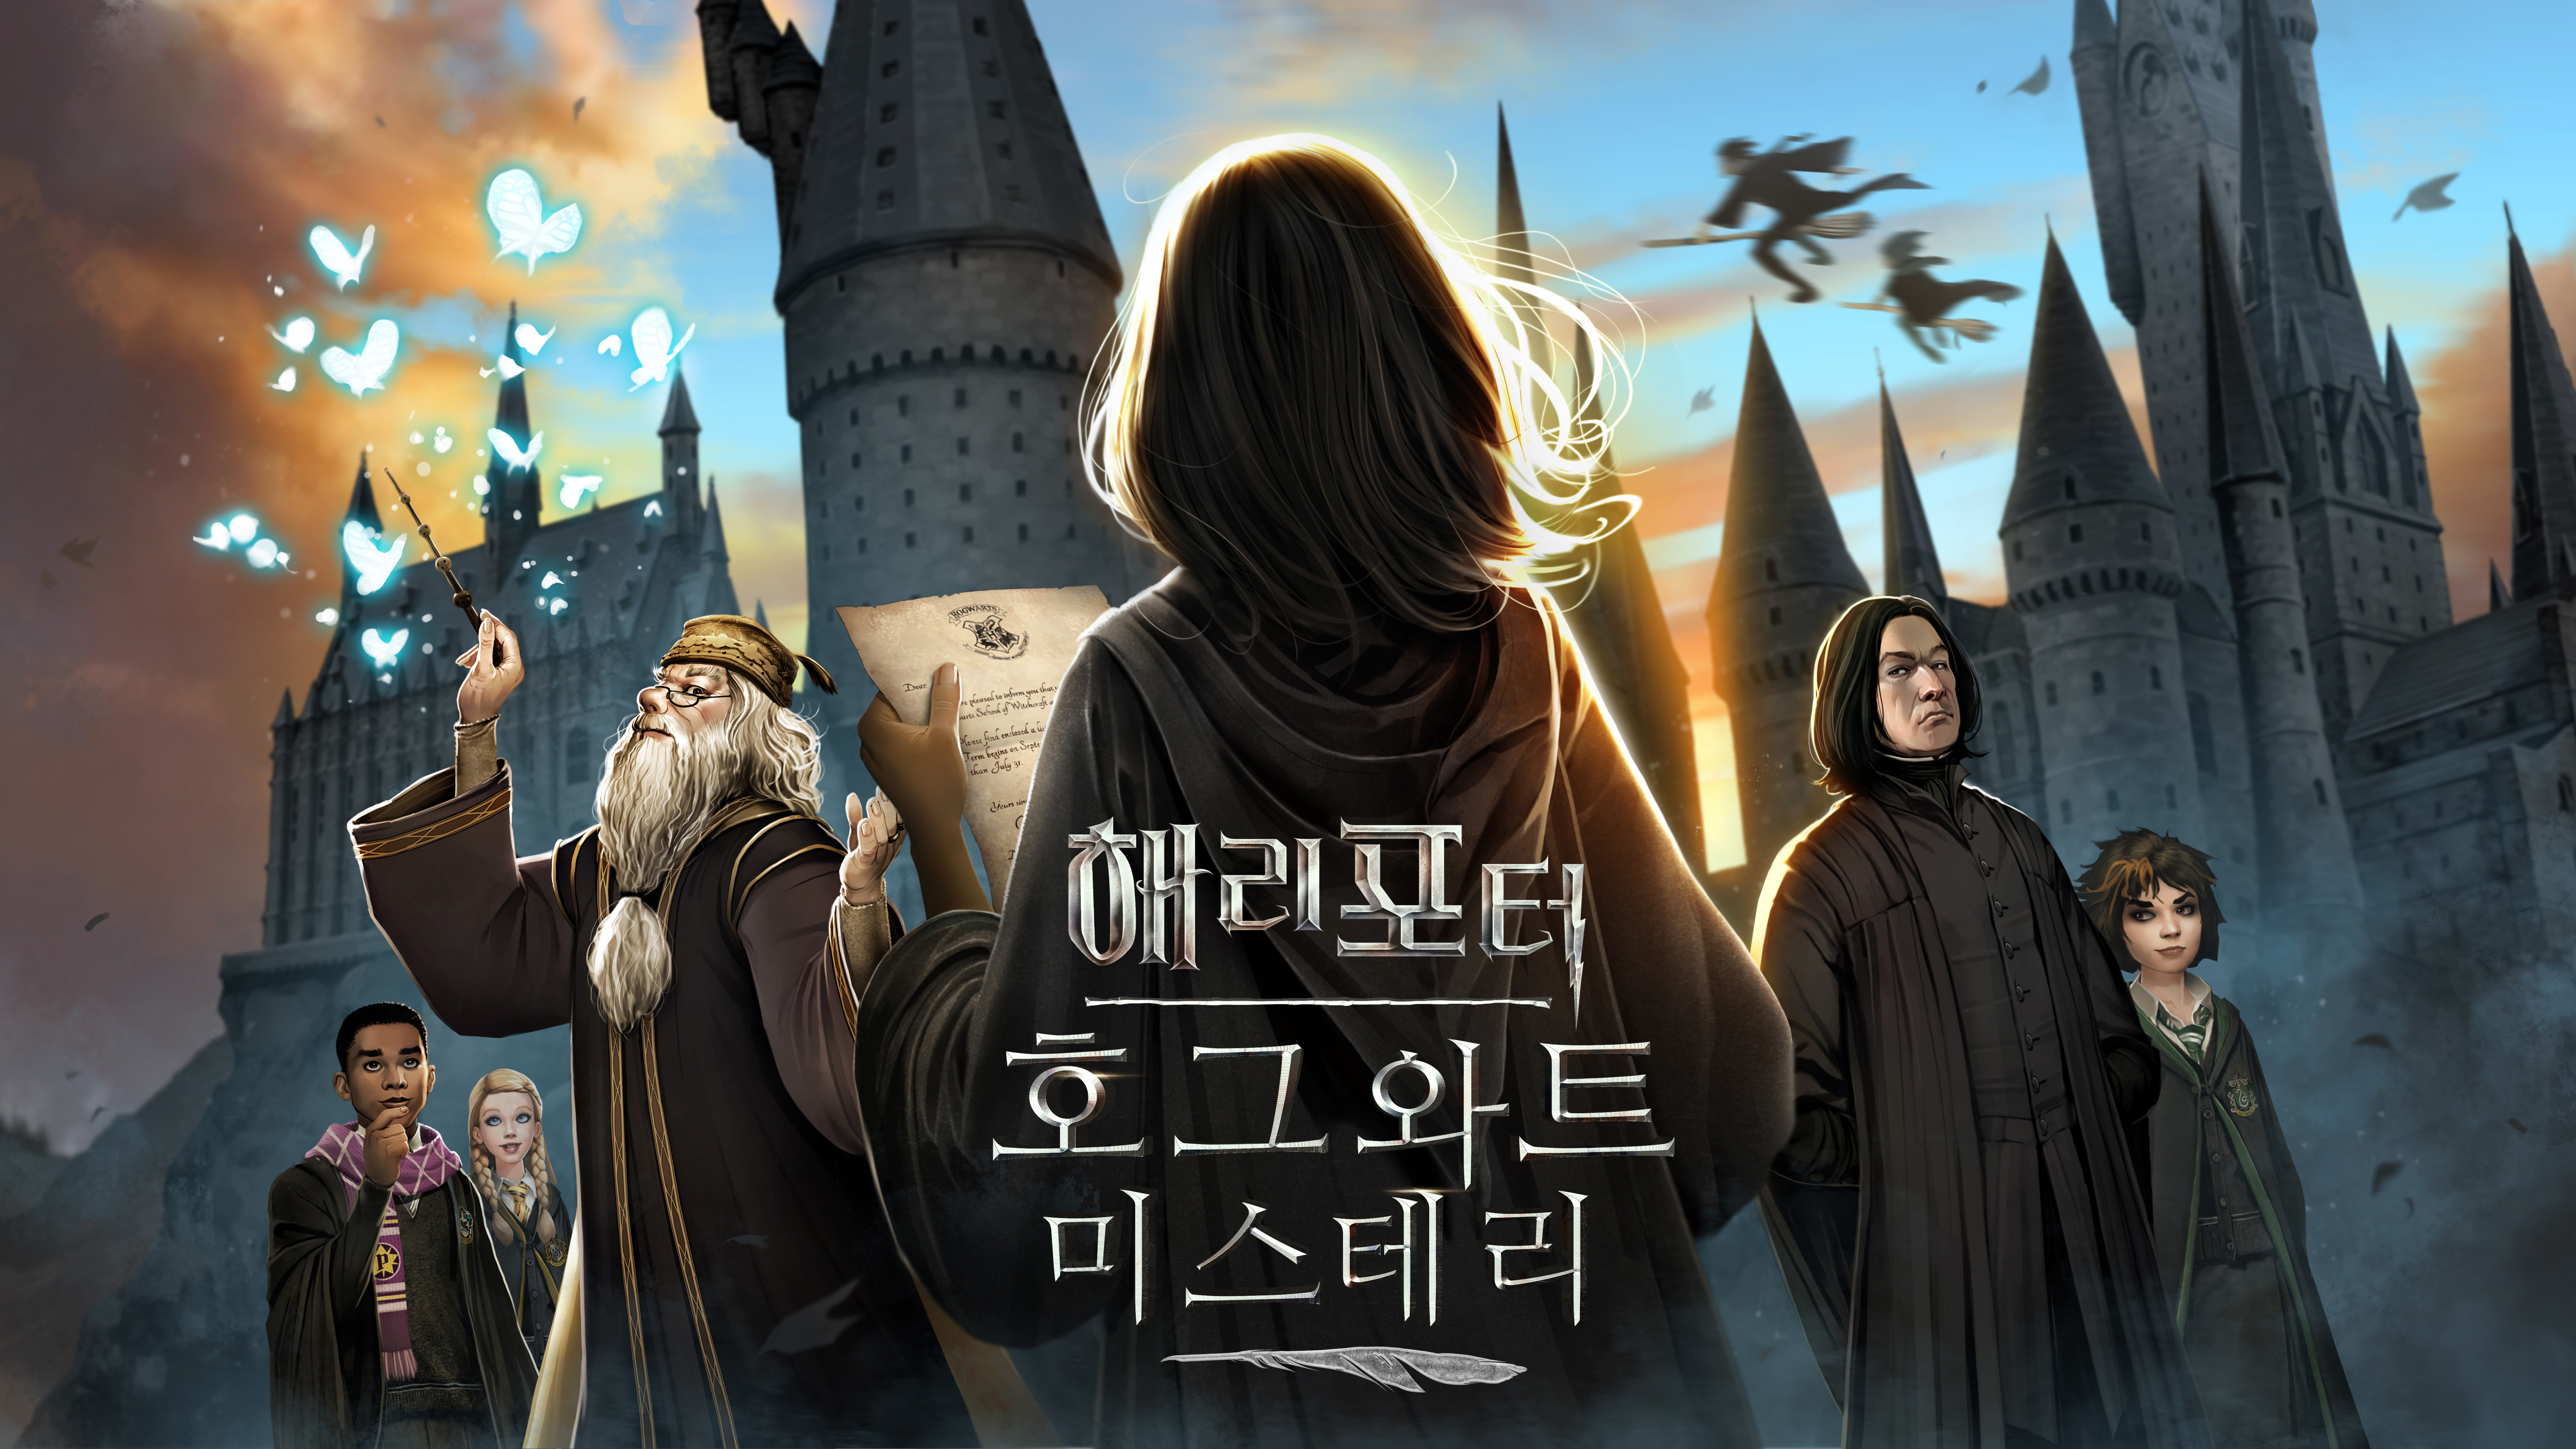 Harry Potter Hogwarts Mystery Korea Key Art 10k 8k HD 4k Wallpaper, Image, Background, Photo and Picture